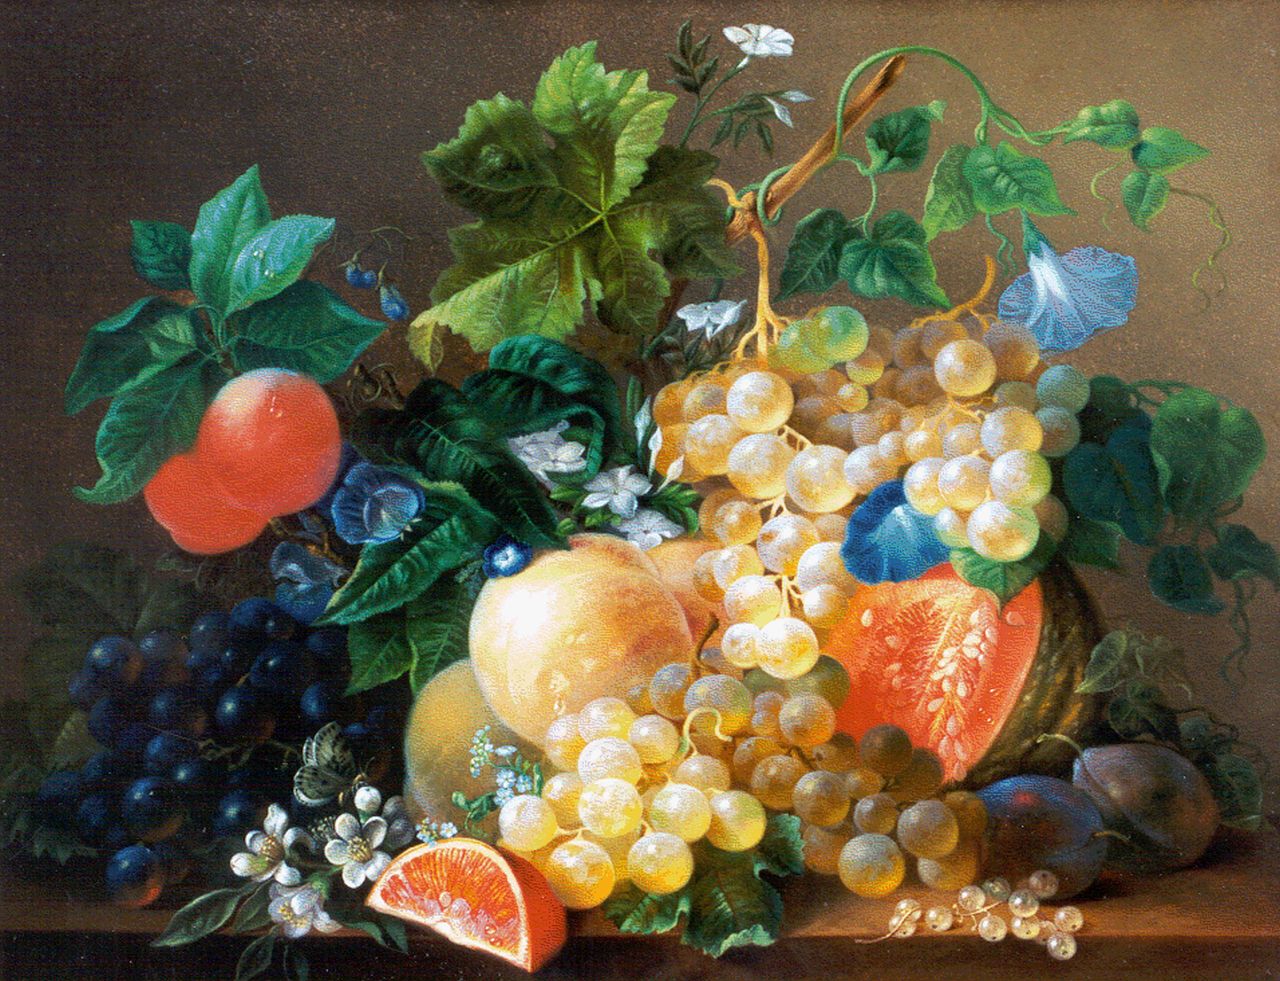 Singendonck D.J.  | Diederik Jan Singendonck, A still life with grapes, oranges and flowers on a marble ledge, oil on panel 35.5 x 46.3 cm, signed l.l.